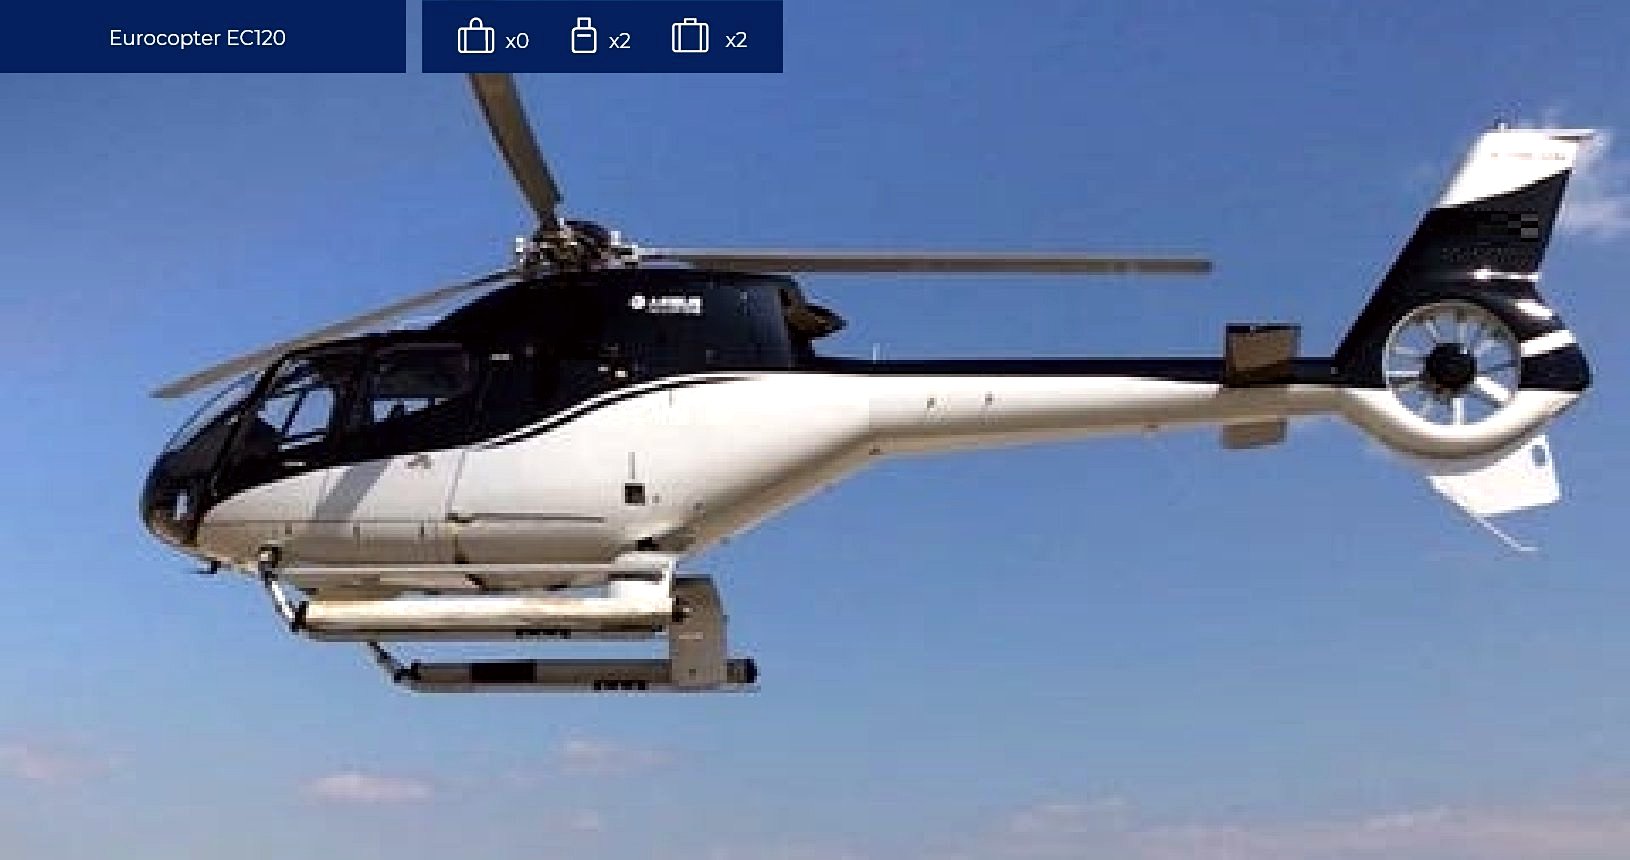 EC120 Eurocopter Greece Zela Jet helicopter charter